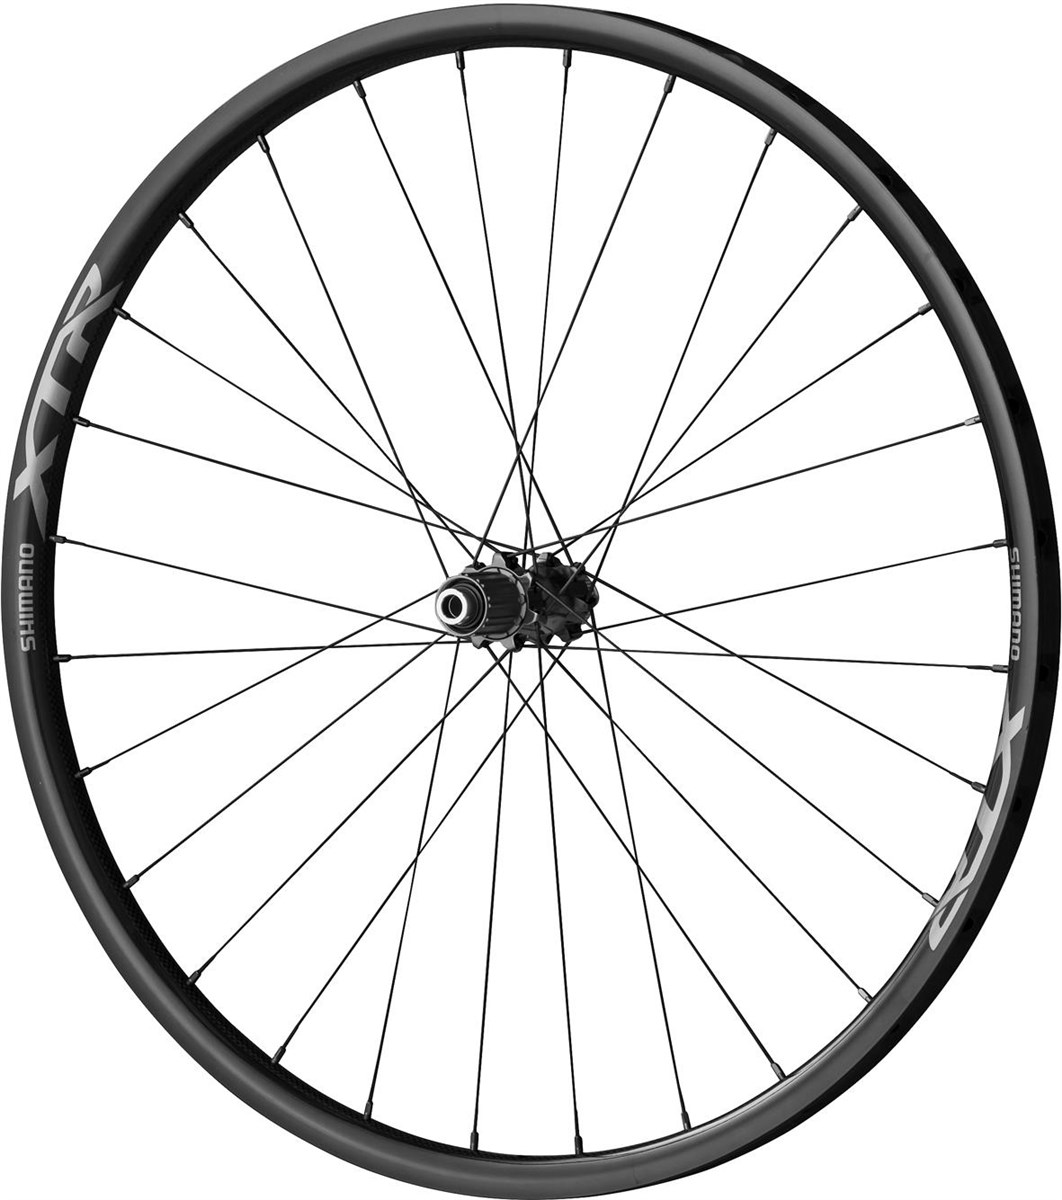 Shimano XTR Carbon Tubular 29" Rear Wheel product image